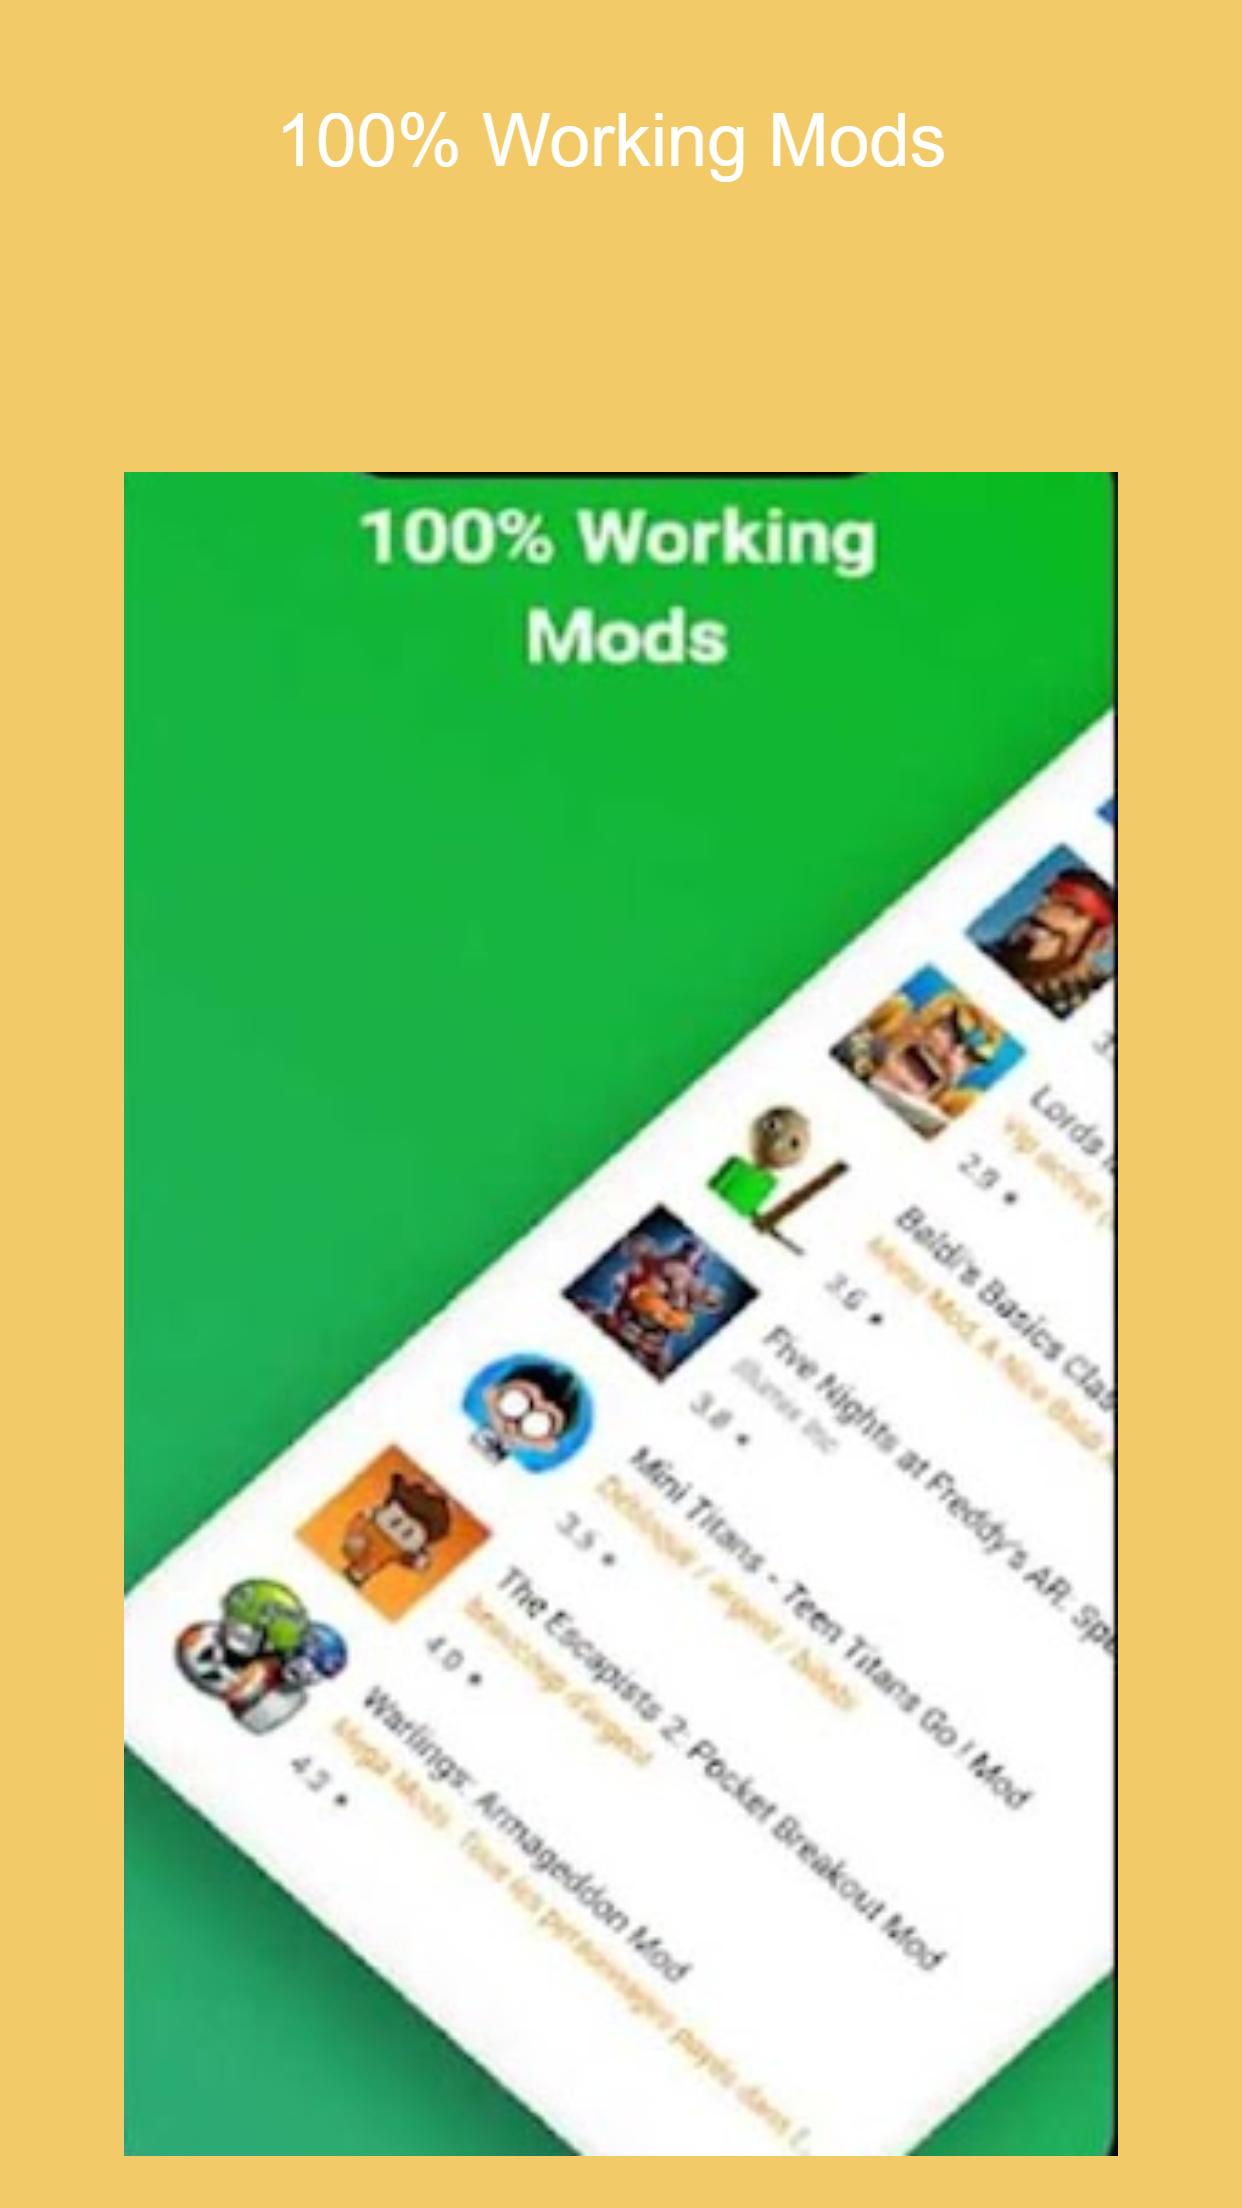 HappyMod:100% working mod apk download